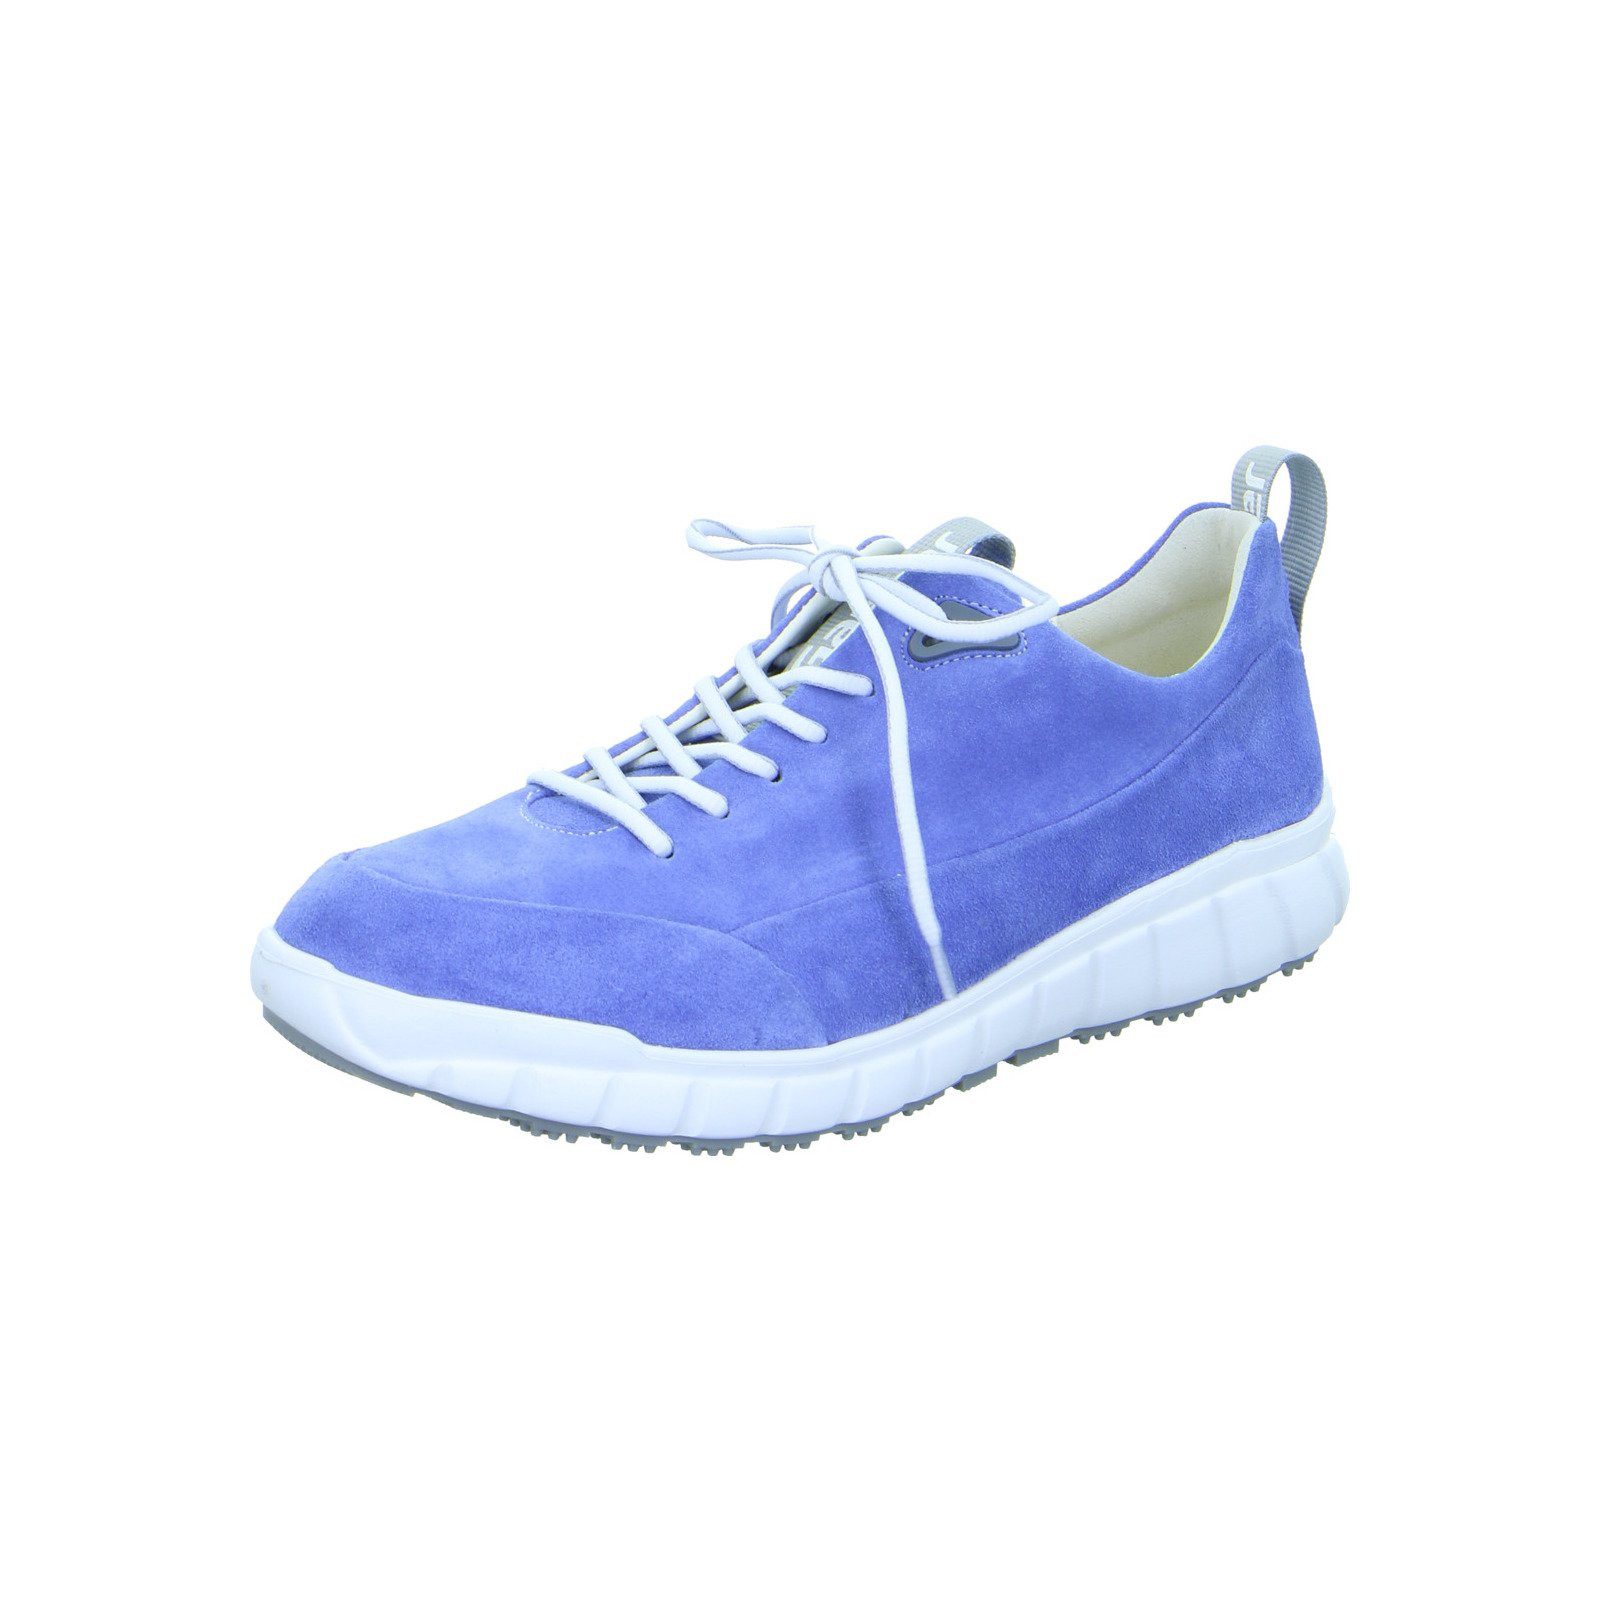 Ganter Evo - Damen Schuhe Schnürschuh Velours blau